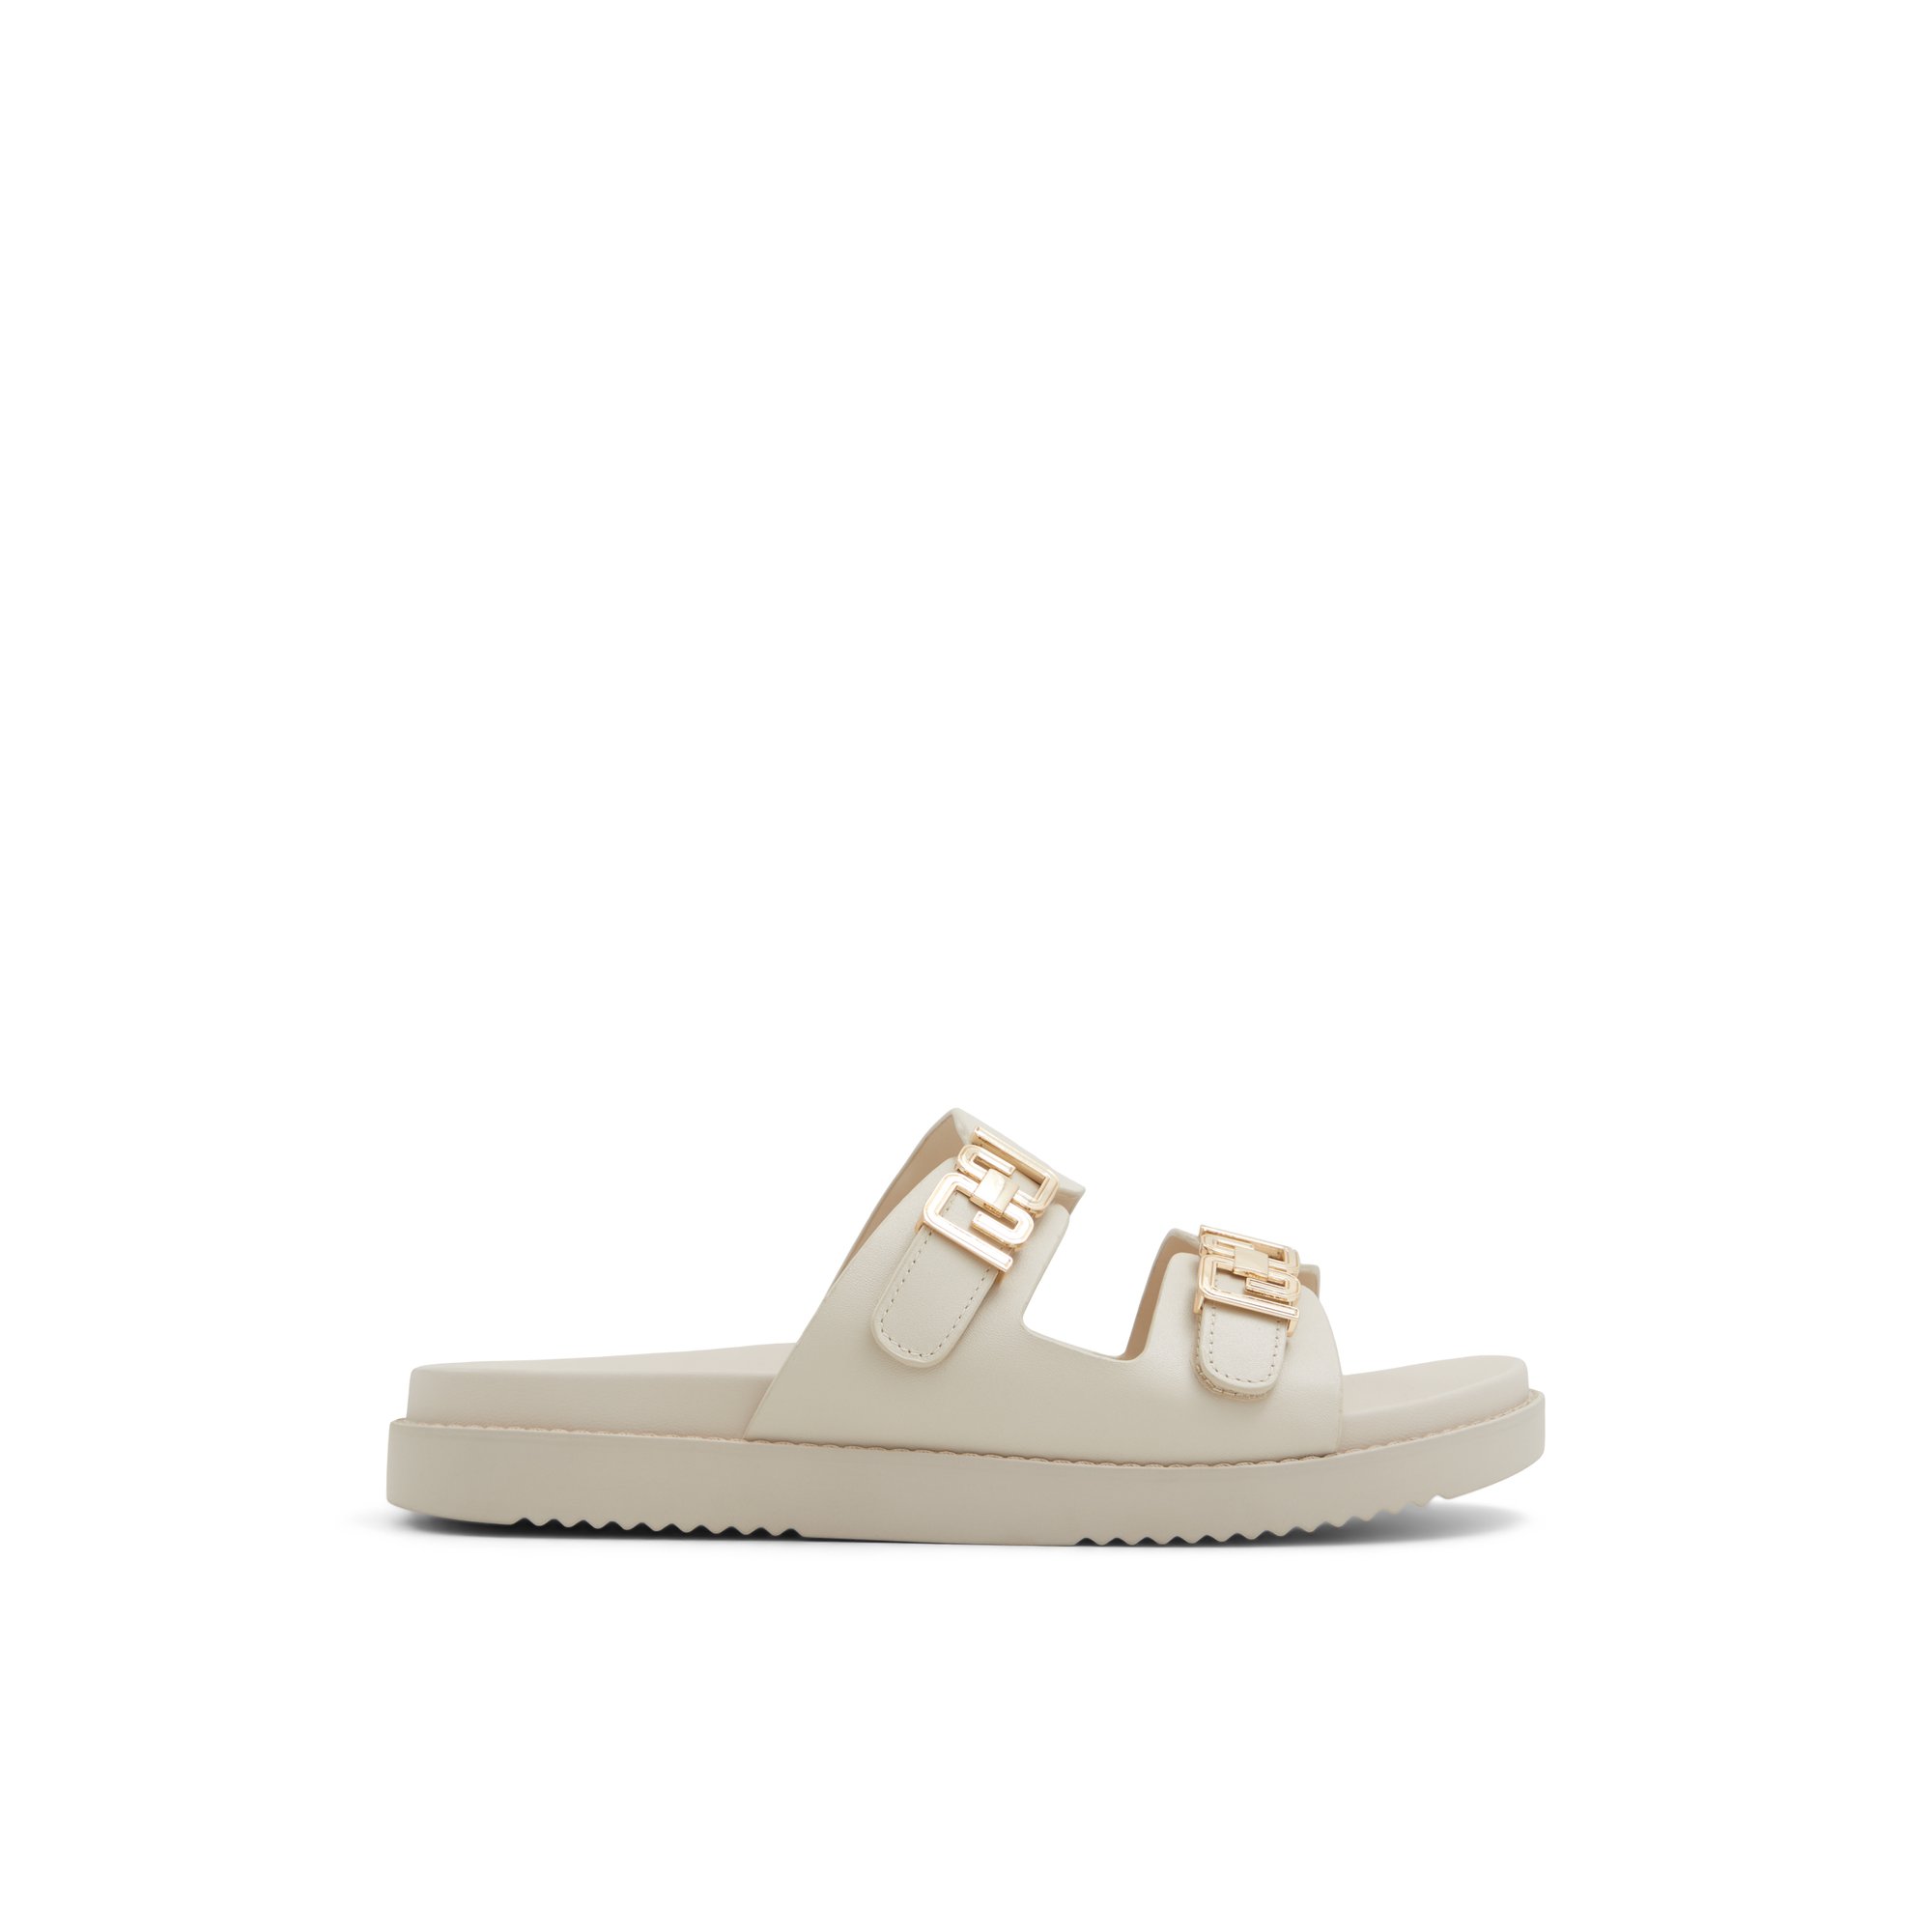 ALDO Alessie - Women's Sandals Flats - White